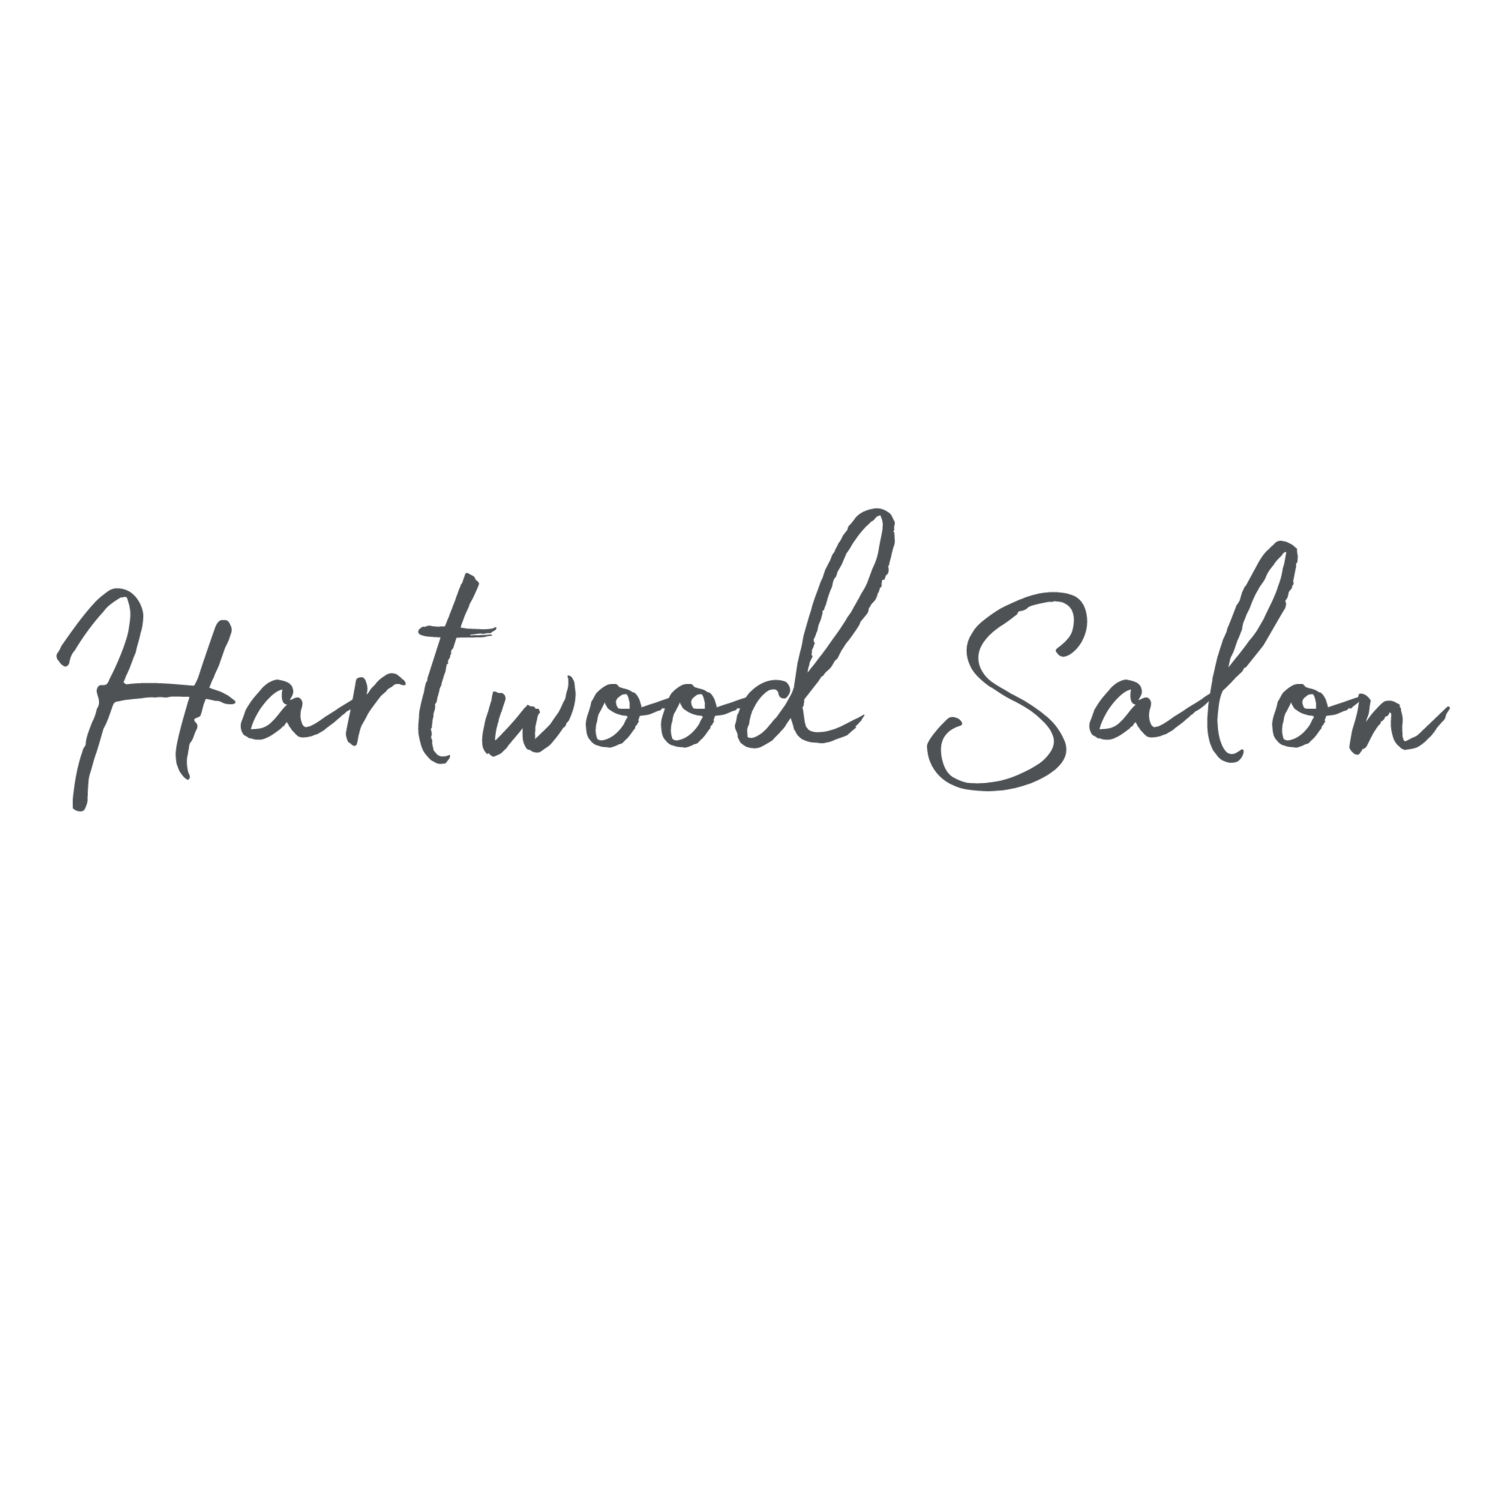 Hartwood Salon